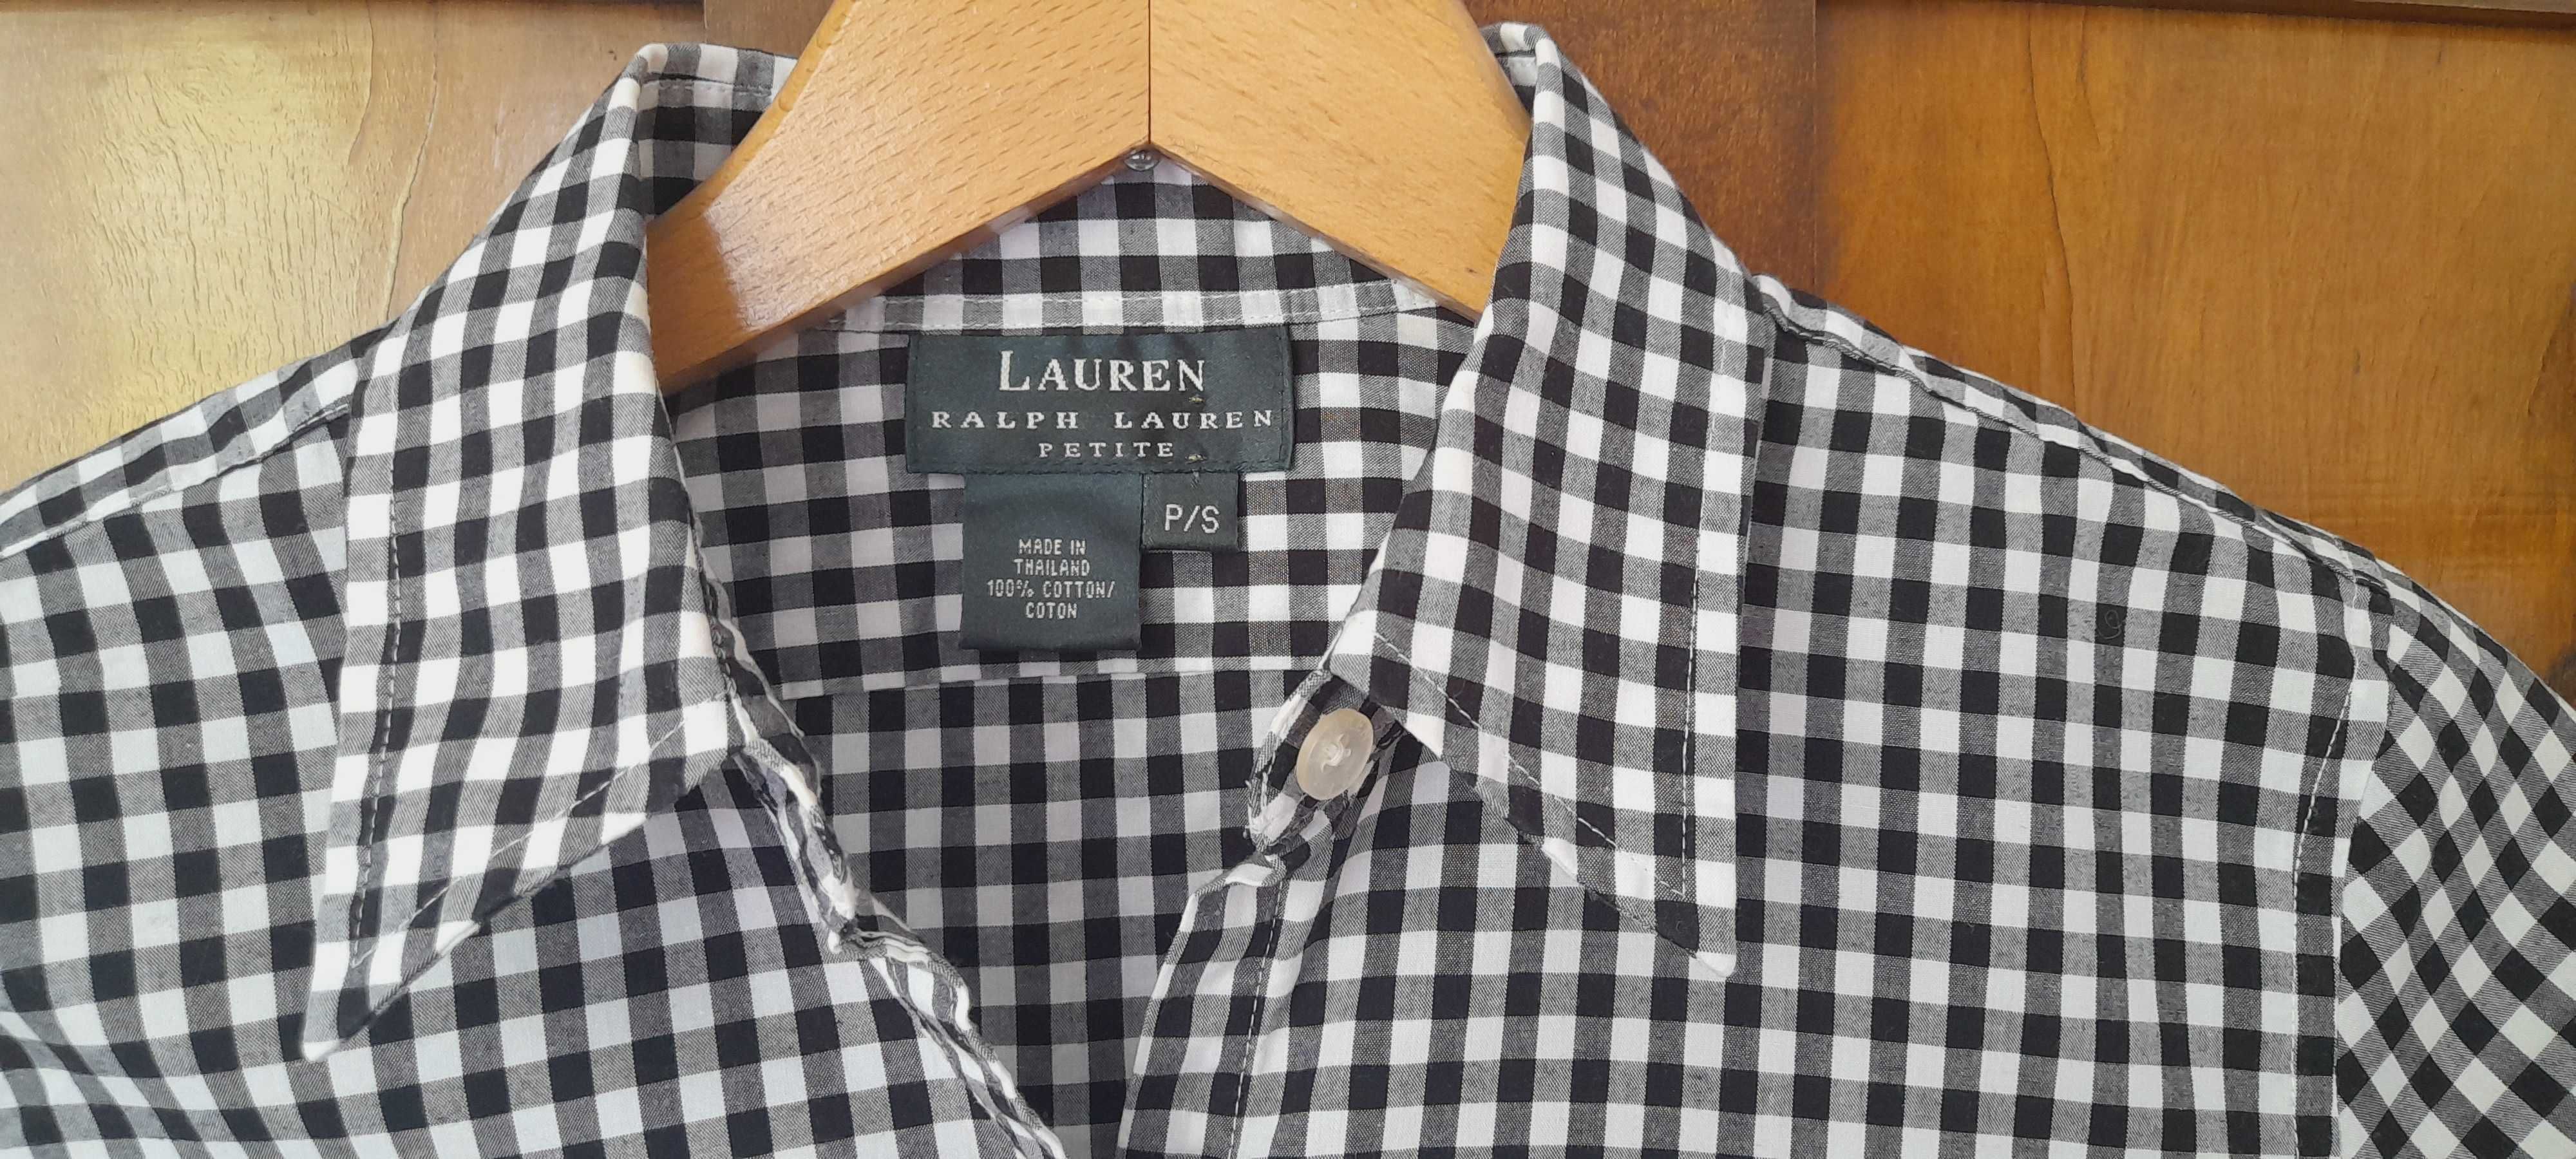 Koszula w kratę, Ralph Lauren.